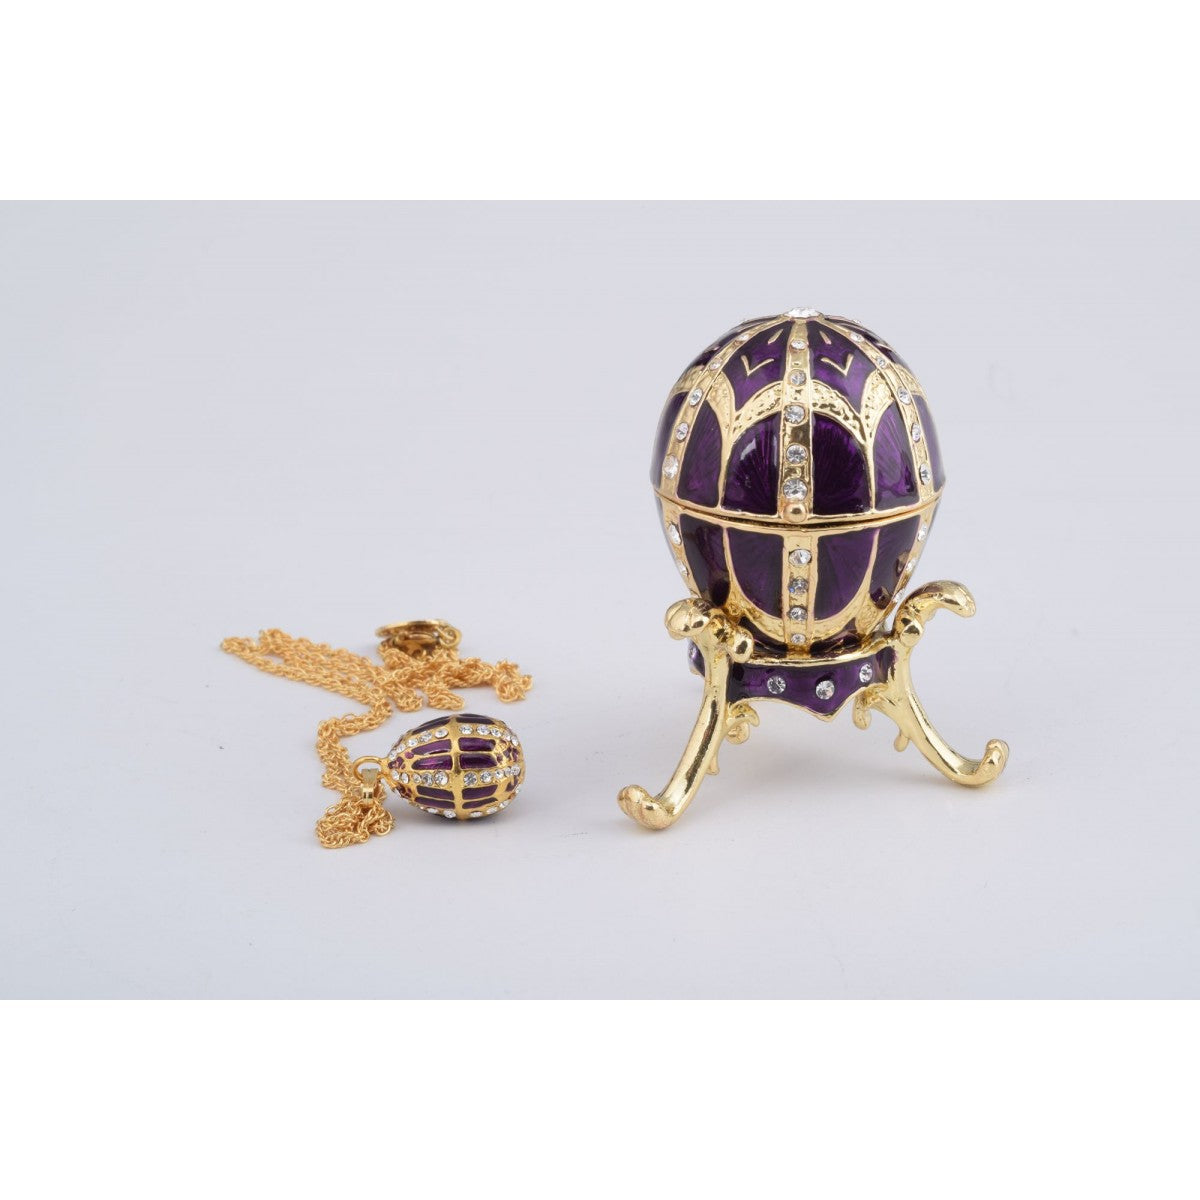 Purple Faberge Style Egg with an Egg Pendant Inside Trinket Box by Keren Kopal